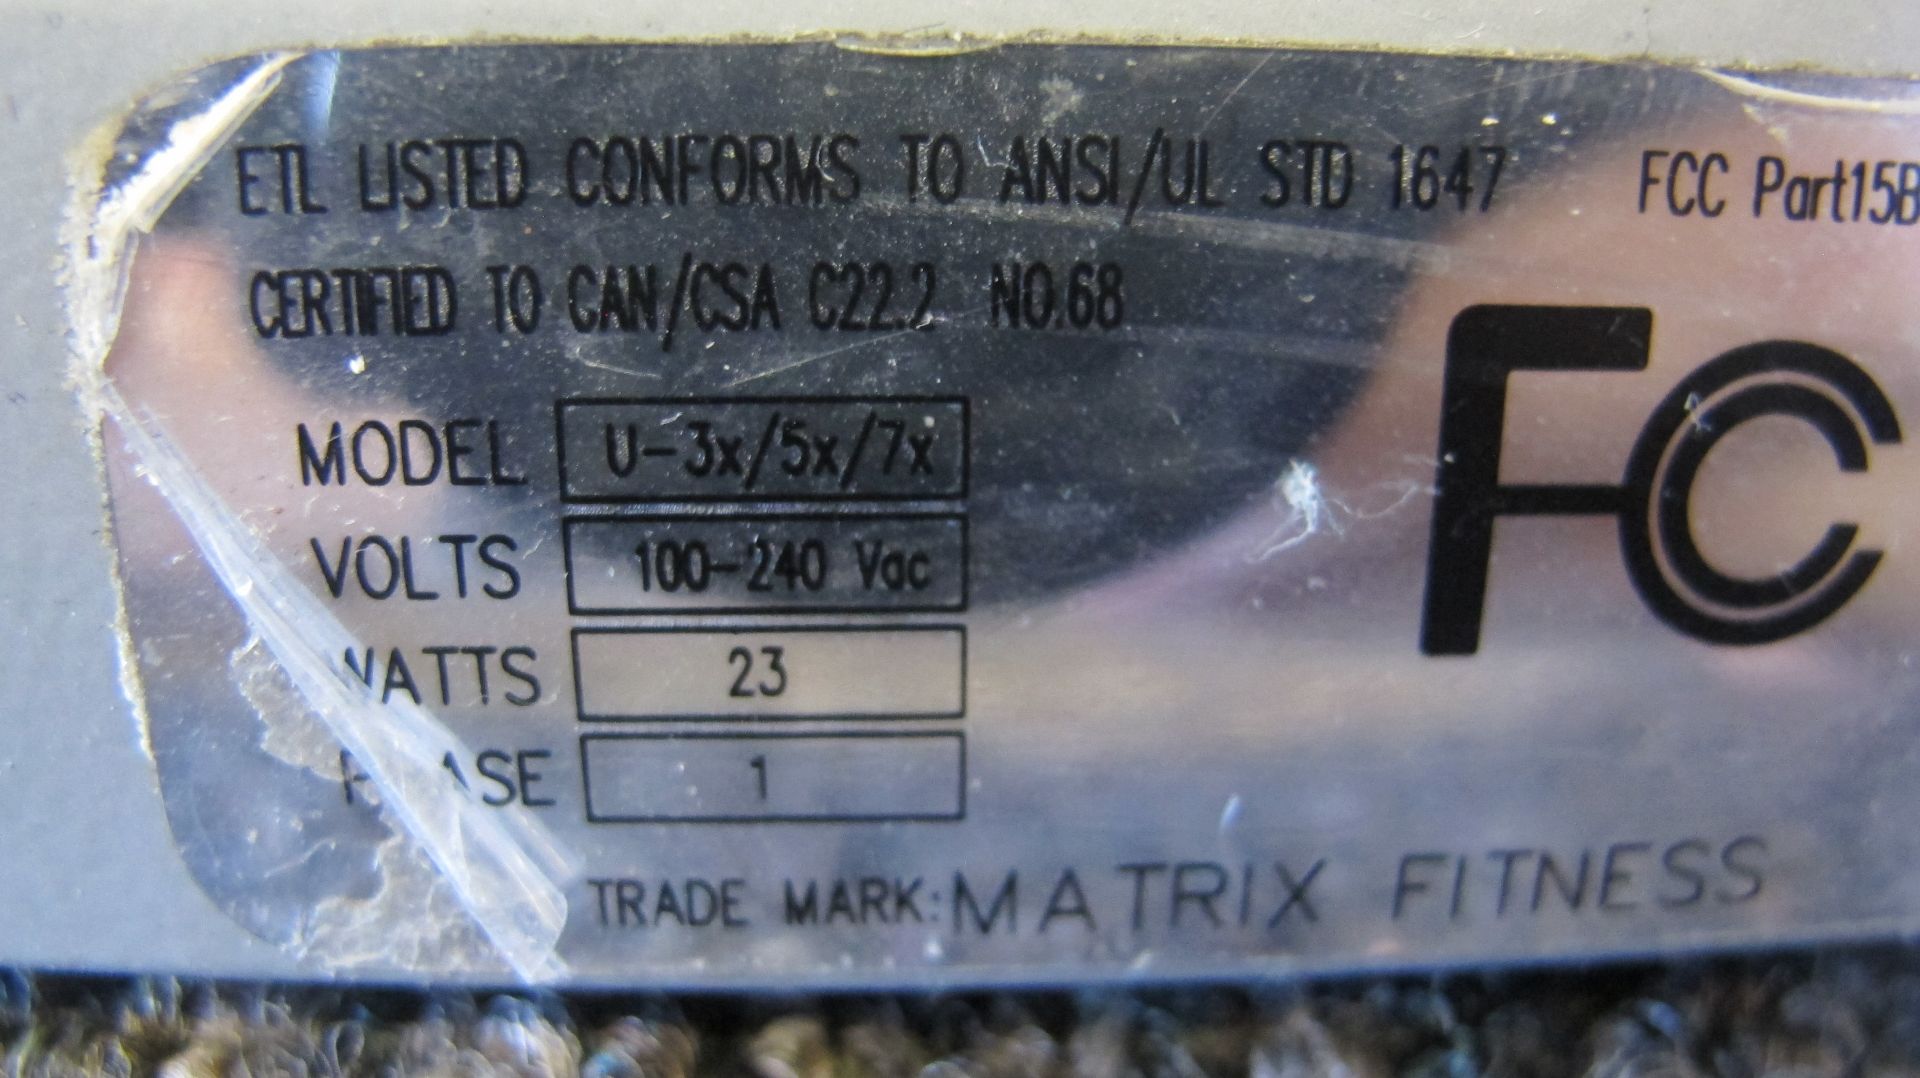 MATRIX U-3X/5X/7X Stationary Bike w/ S-3X-01-C Digital Dislay, Heart Rate Monitor - Image 10 of 10